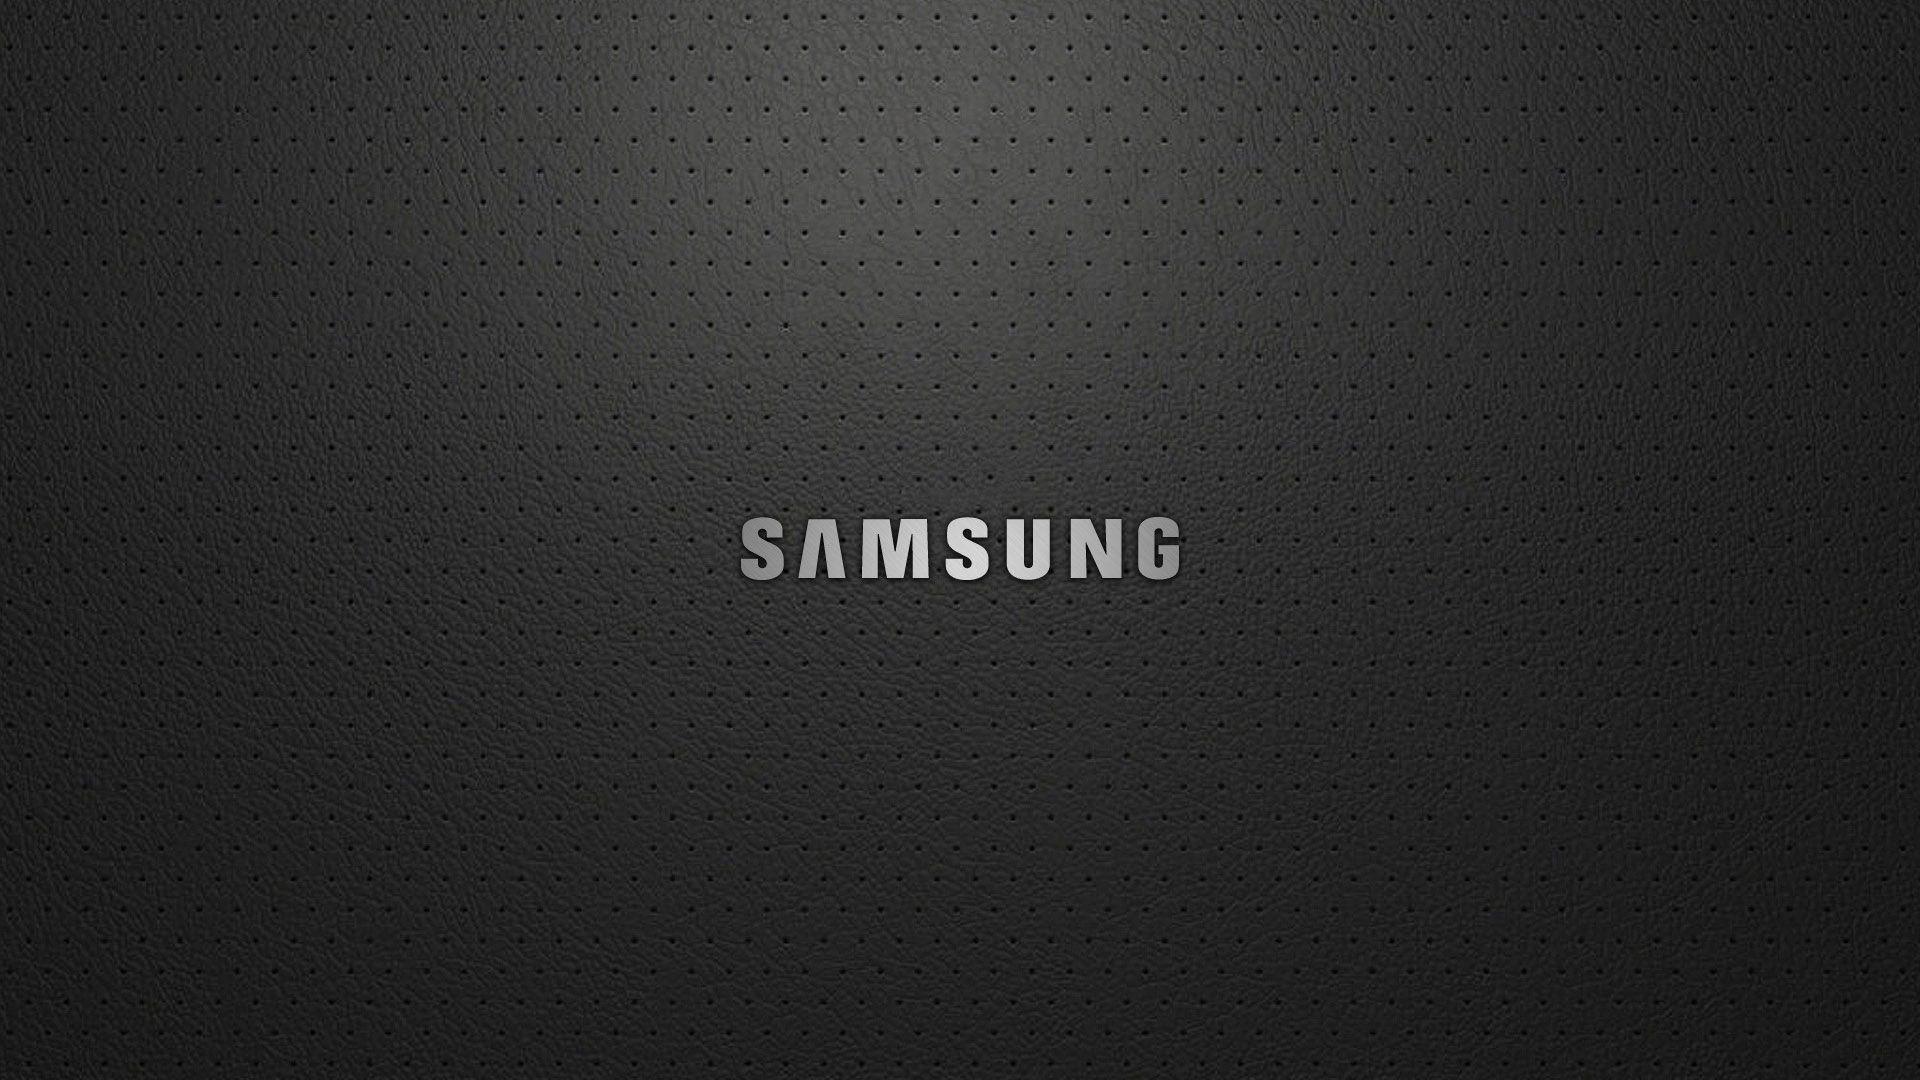 Samsung Mobile Logo - Samsung-Logo-High-Resolution-Wallpapers - Tech Gadget Central